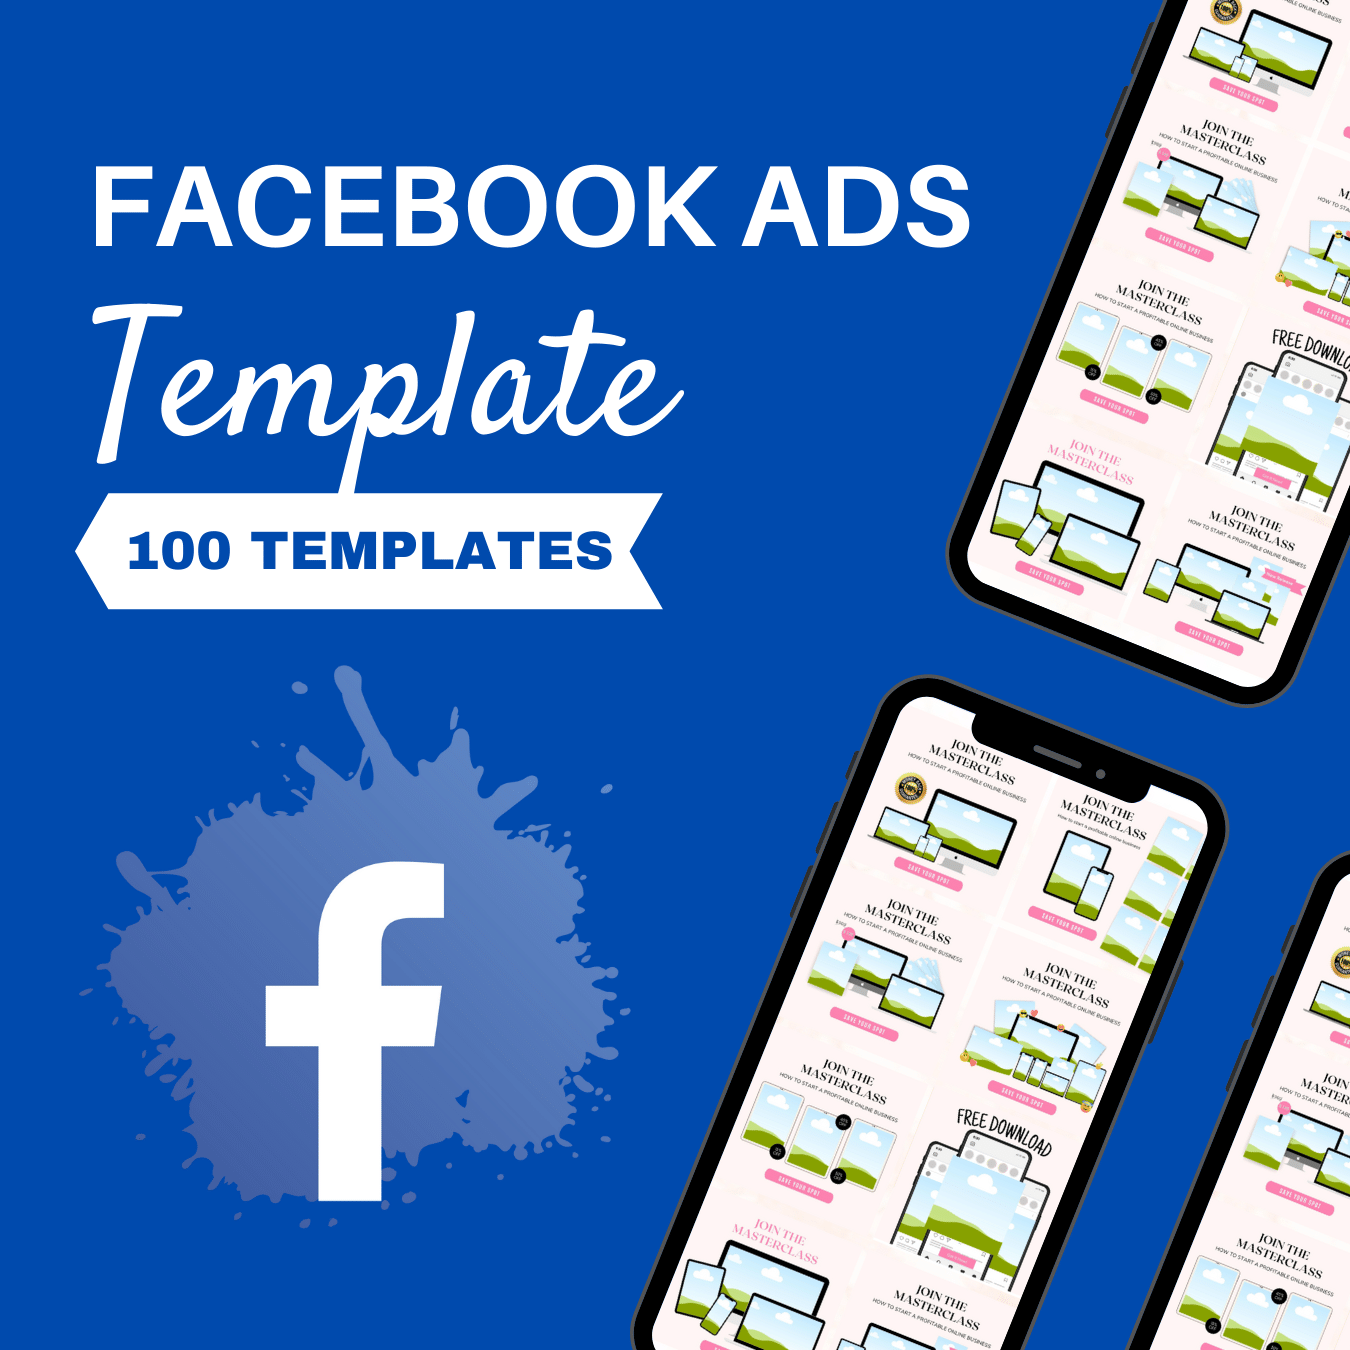 Facebook Ads Template - 100 Templates